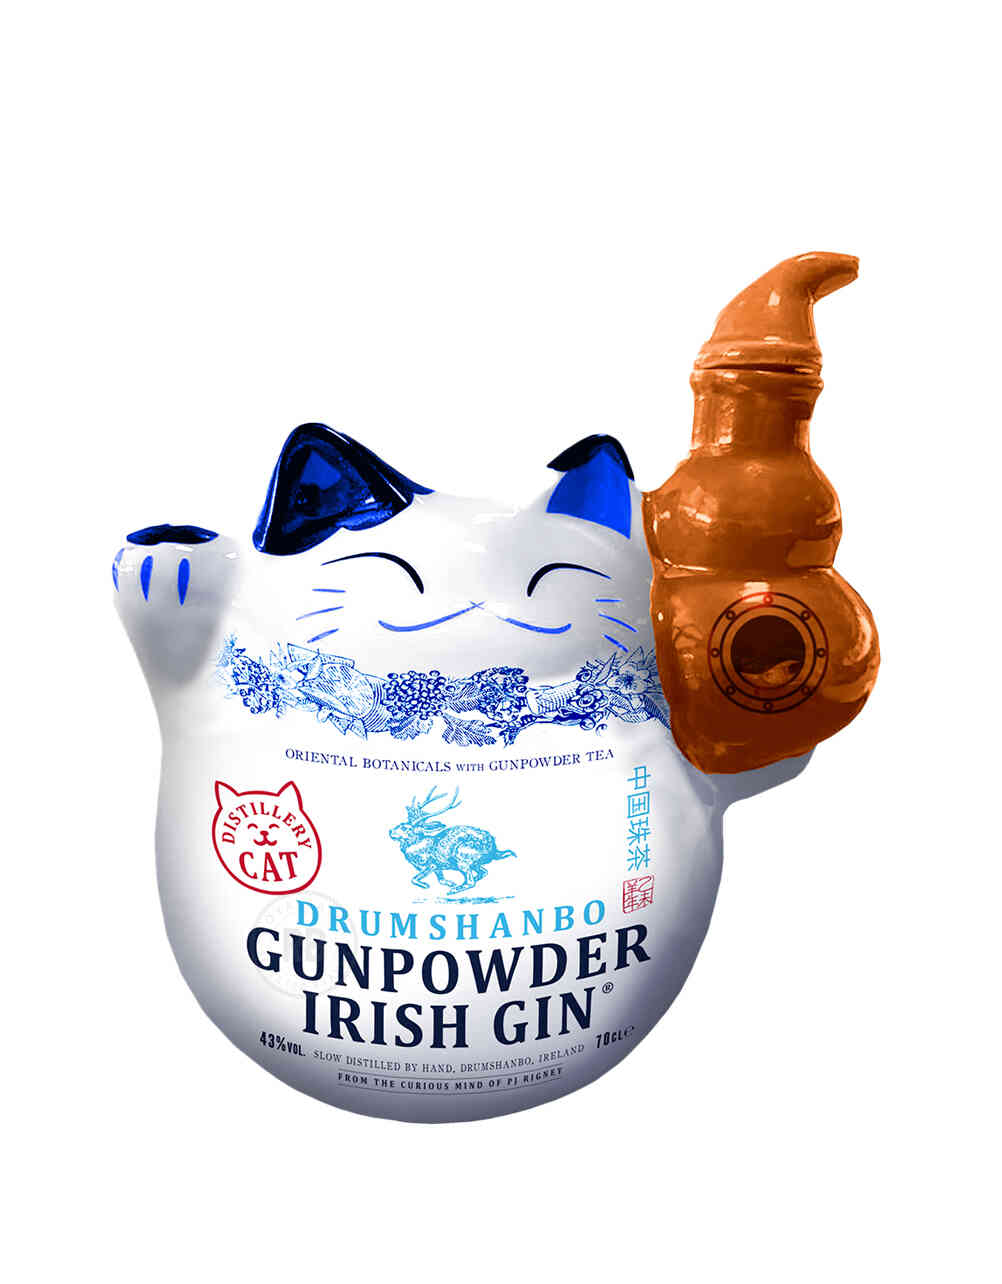 Drumshanbo Ceramic Cat Bottle Gunpowder Irish Gin